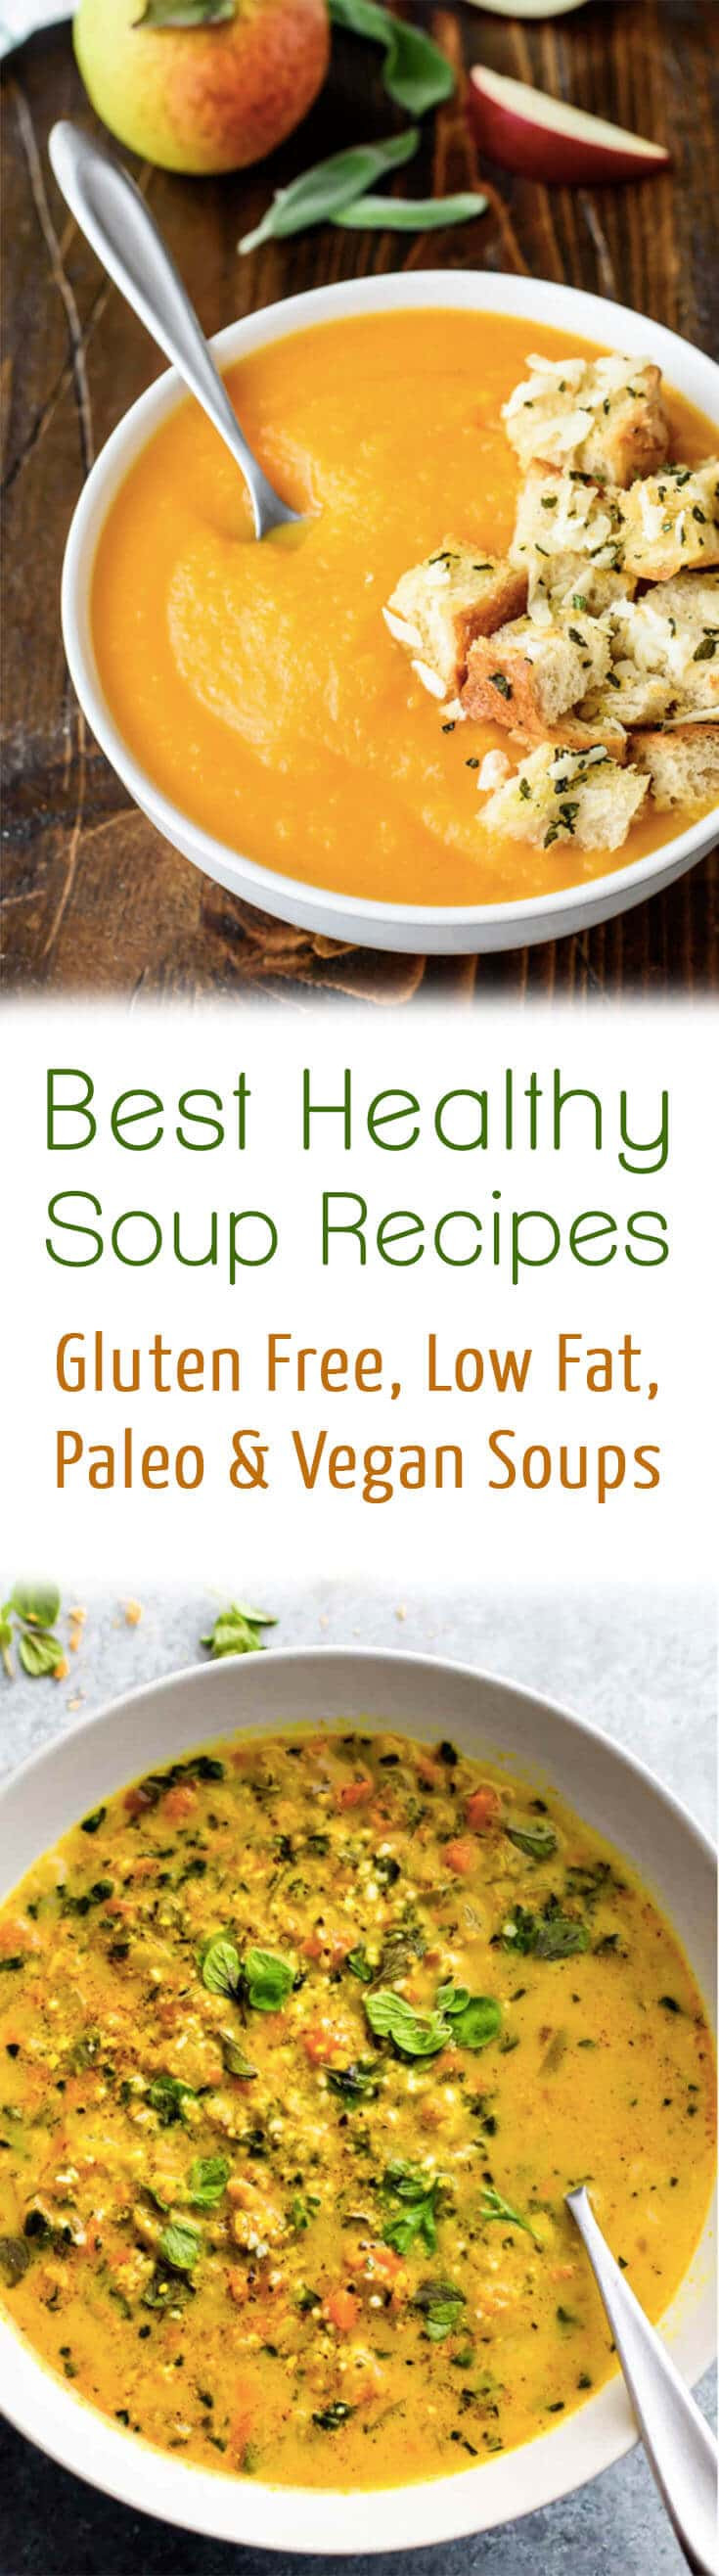 Low Fat Soup Recipes
 10 Best Healthy Soup Recipes